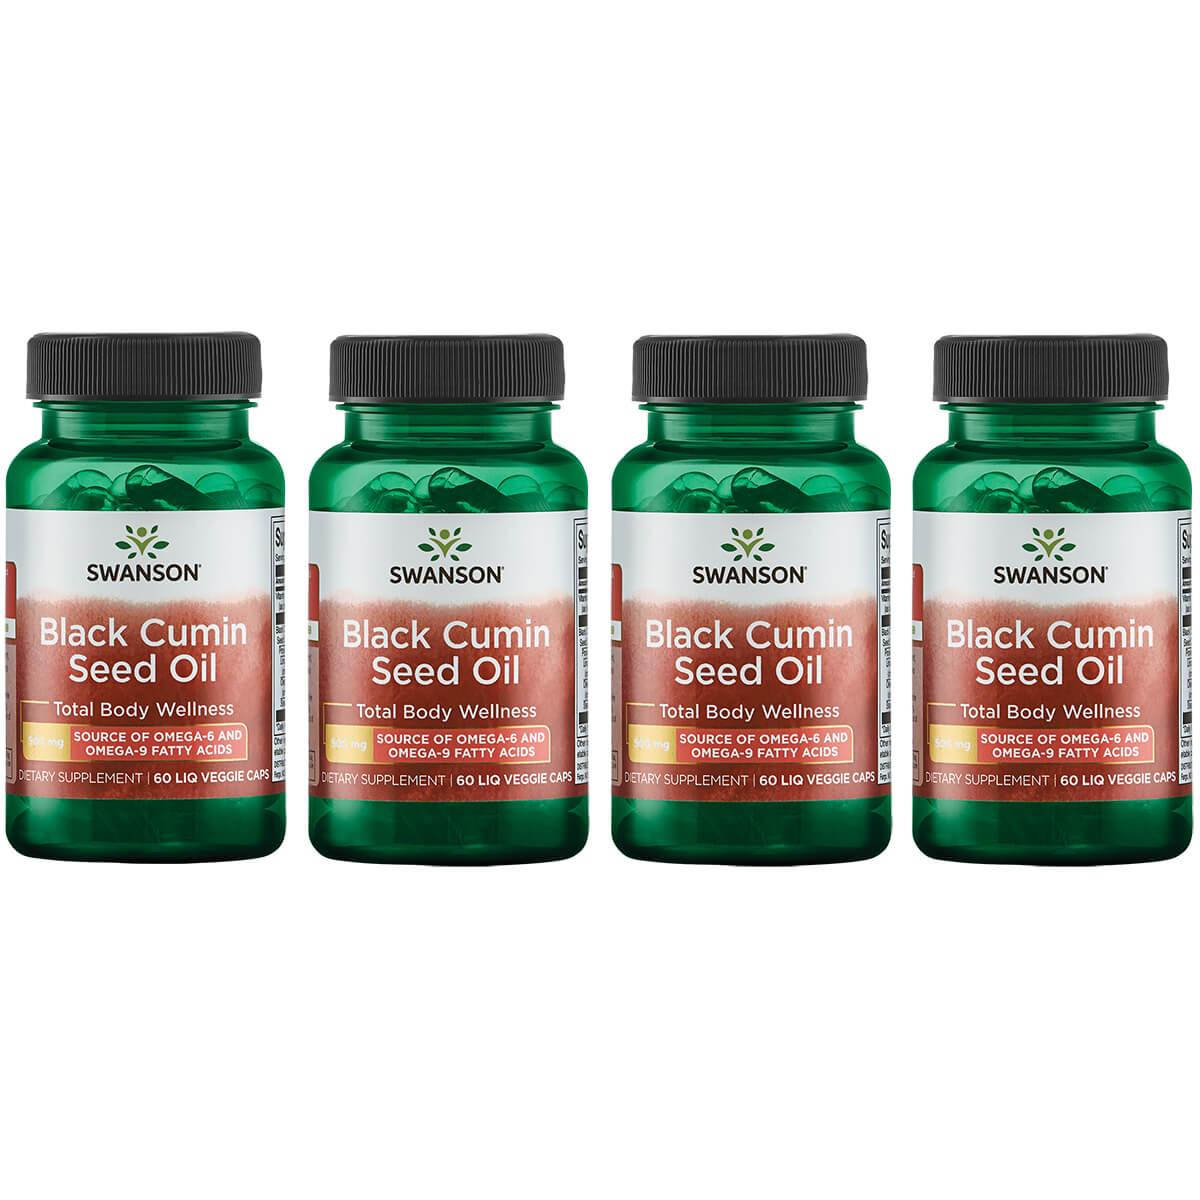 Swanson EFAs Black Cumin Seed Oil 4 Pack Supplement Vitamin 500 mg 60 Liquid Vegcap